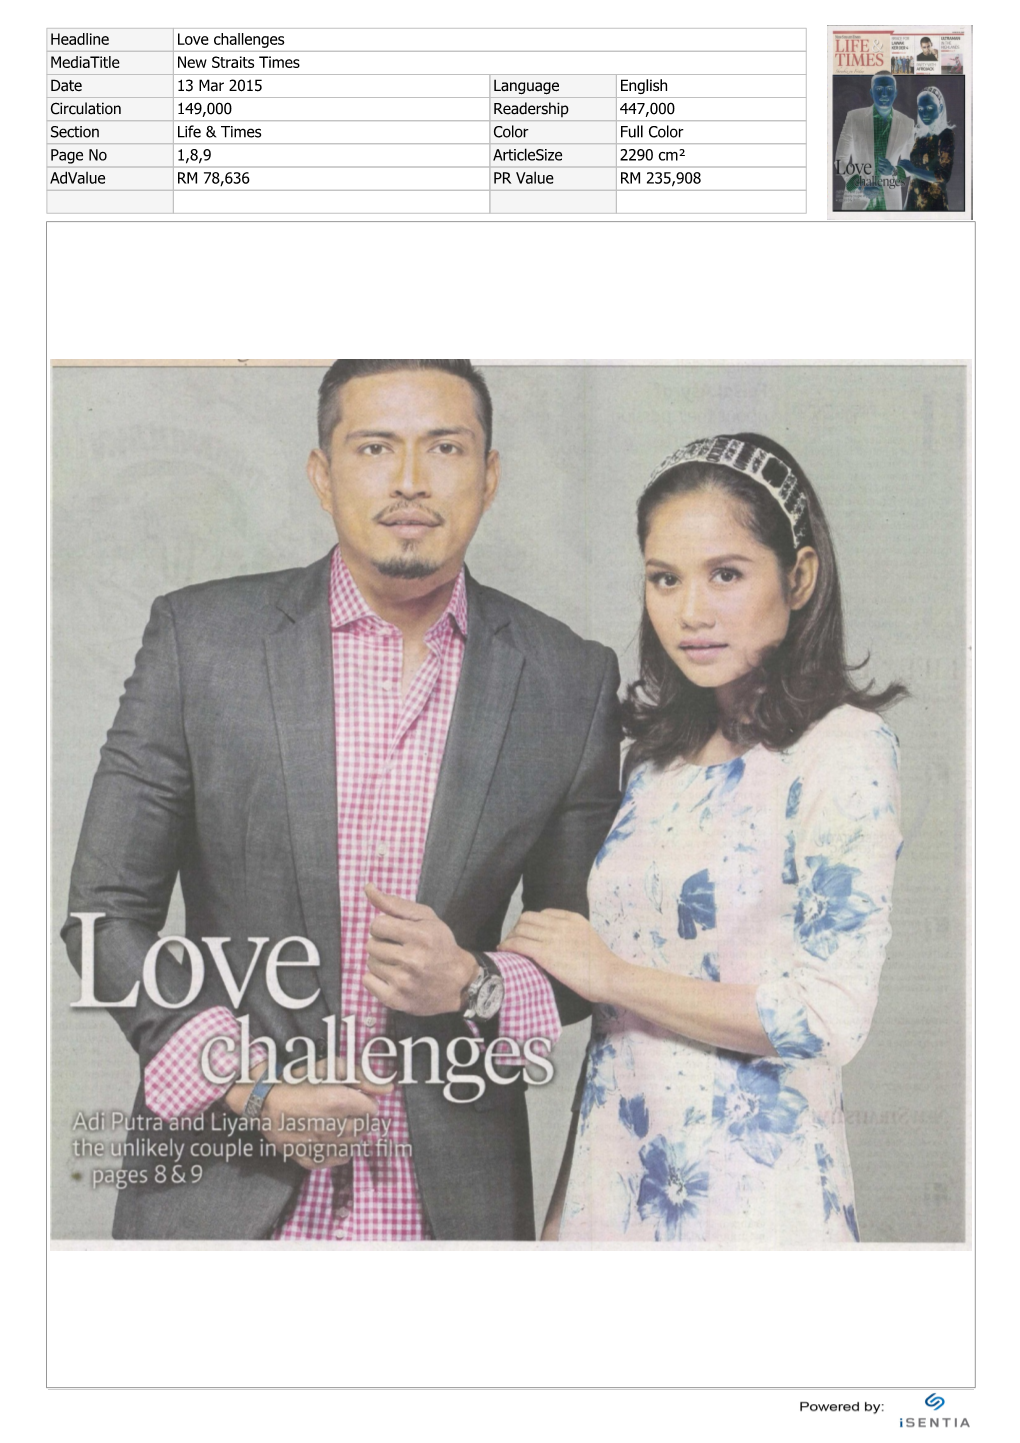 Headline Love Challenges Mediatitle New Straits Times Date 13 Mar